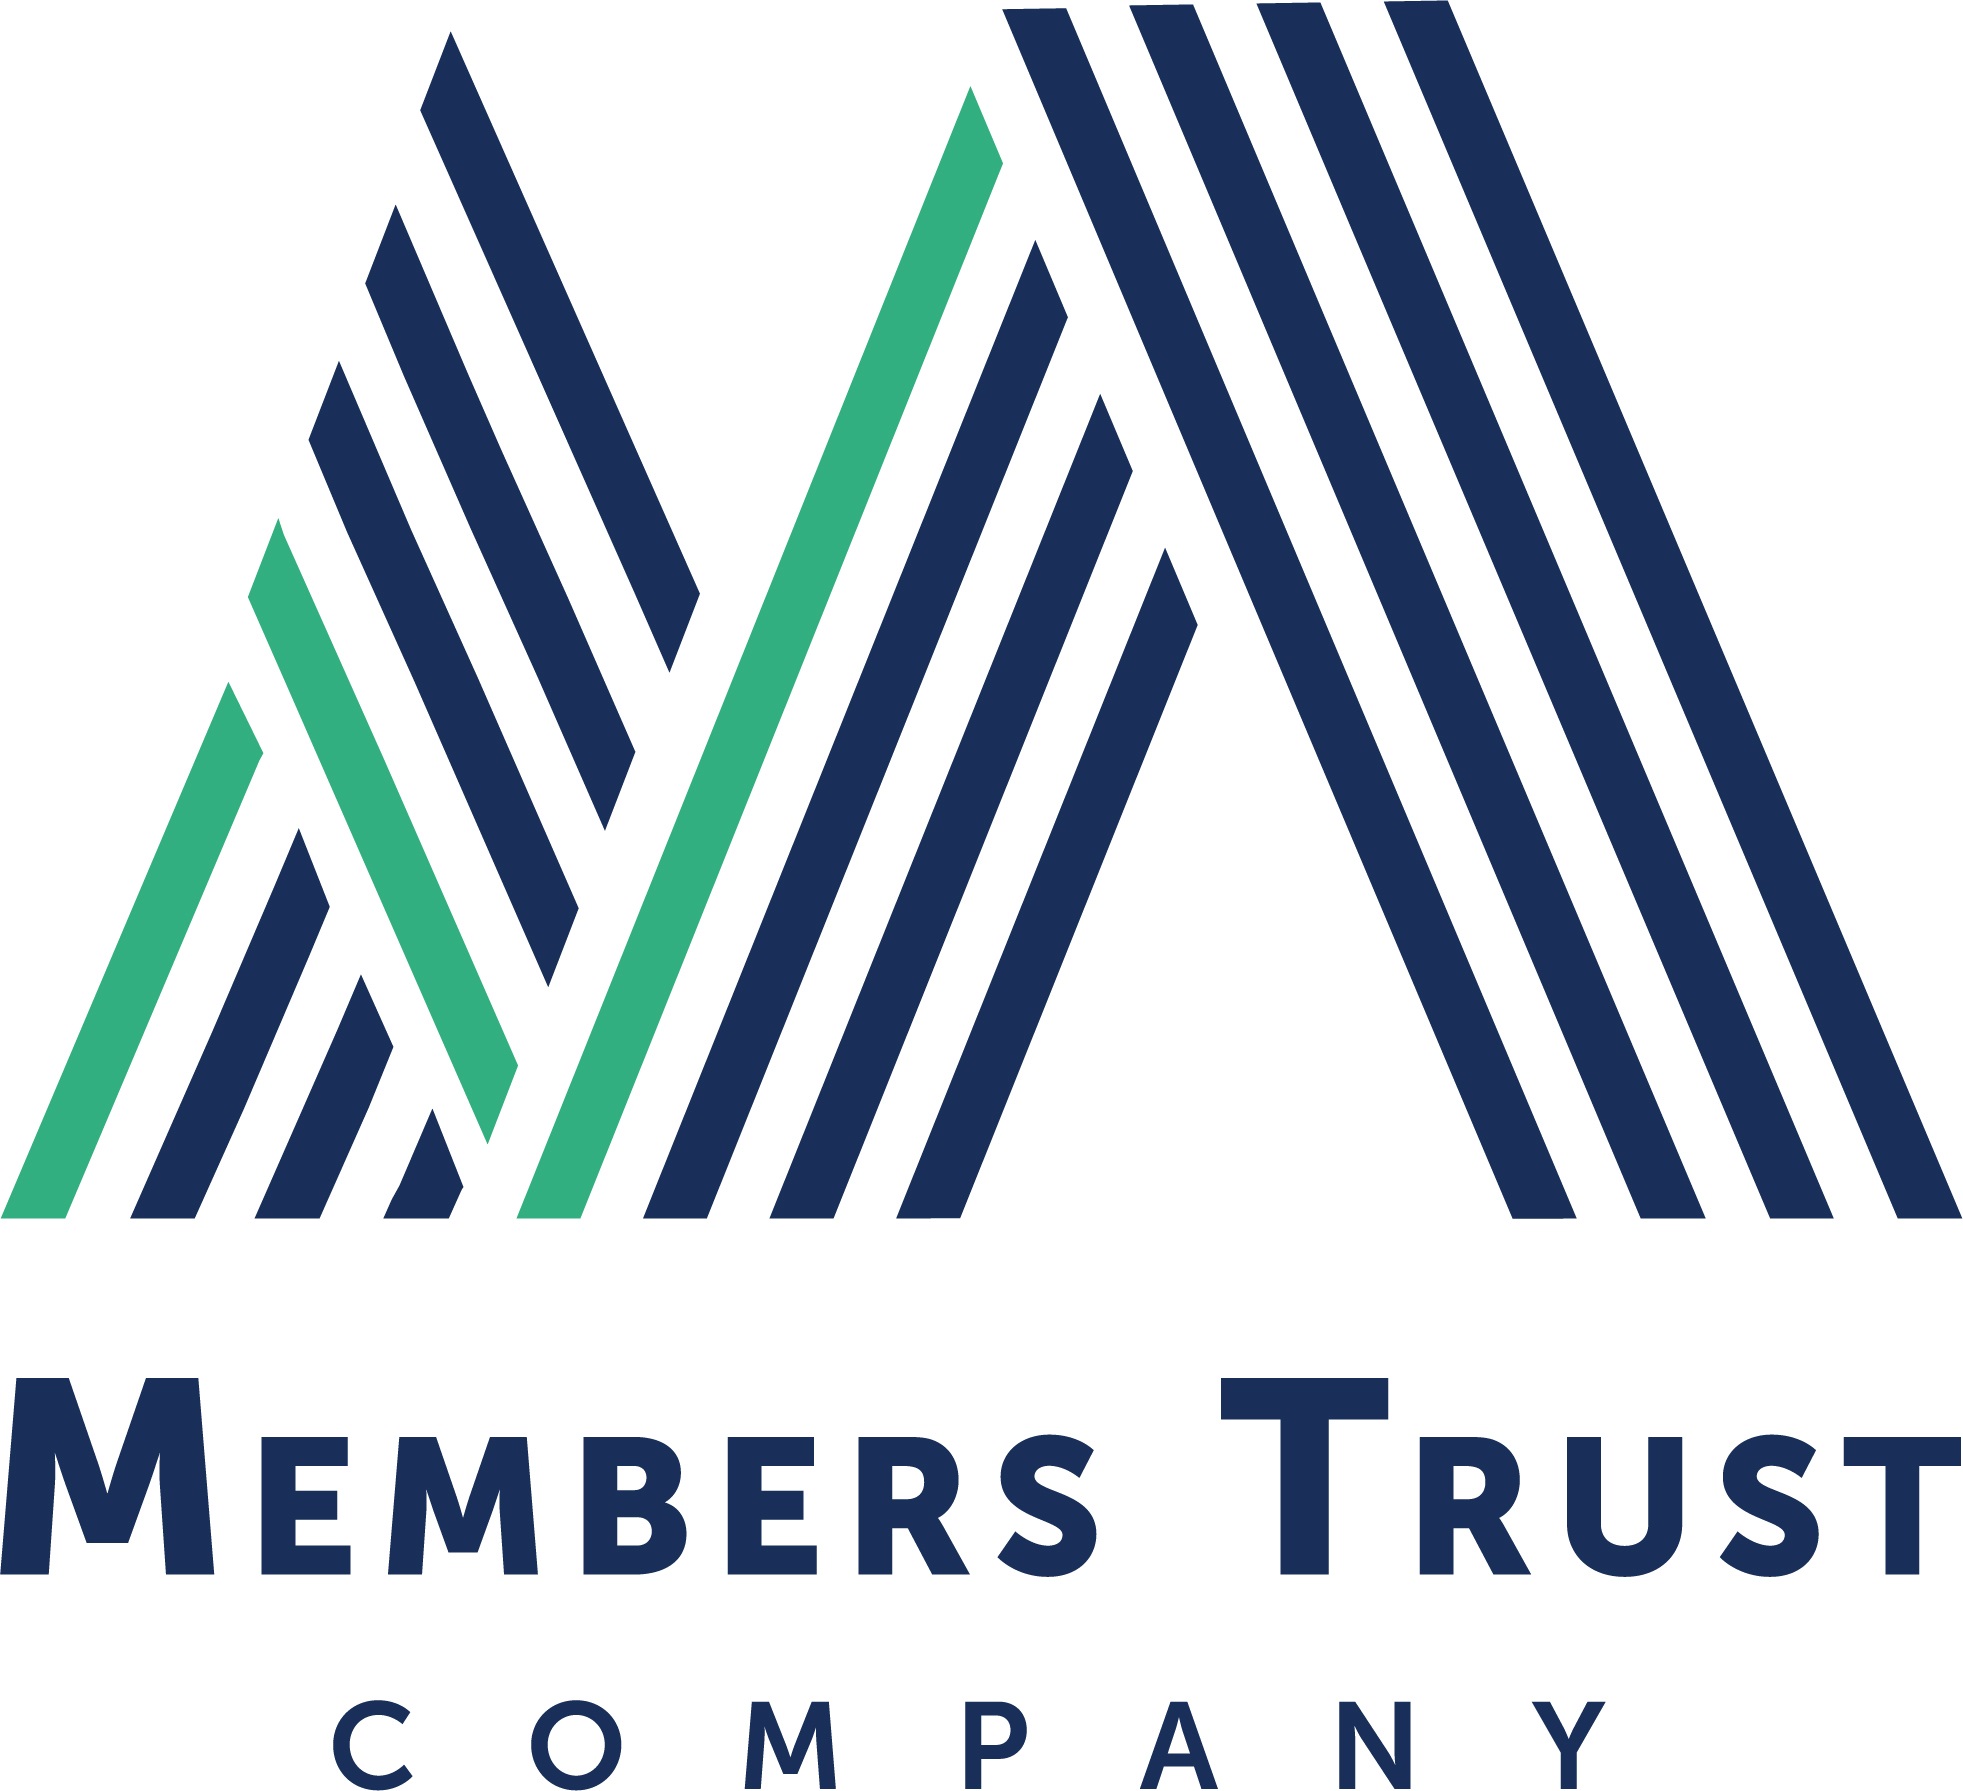 Members Trust